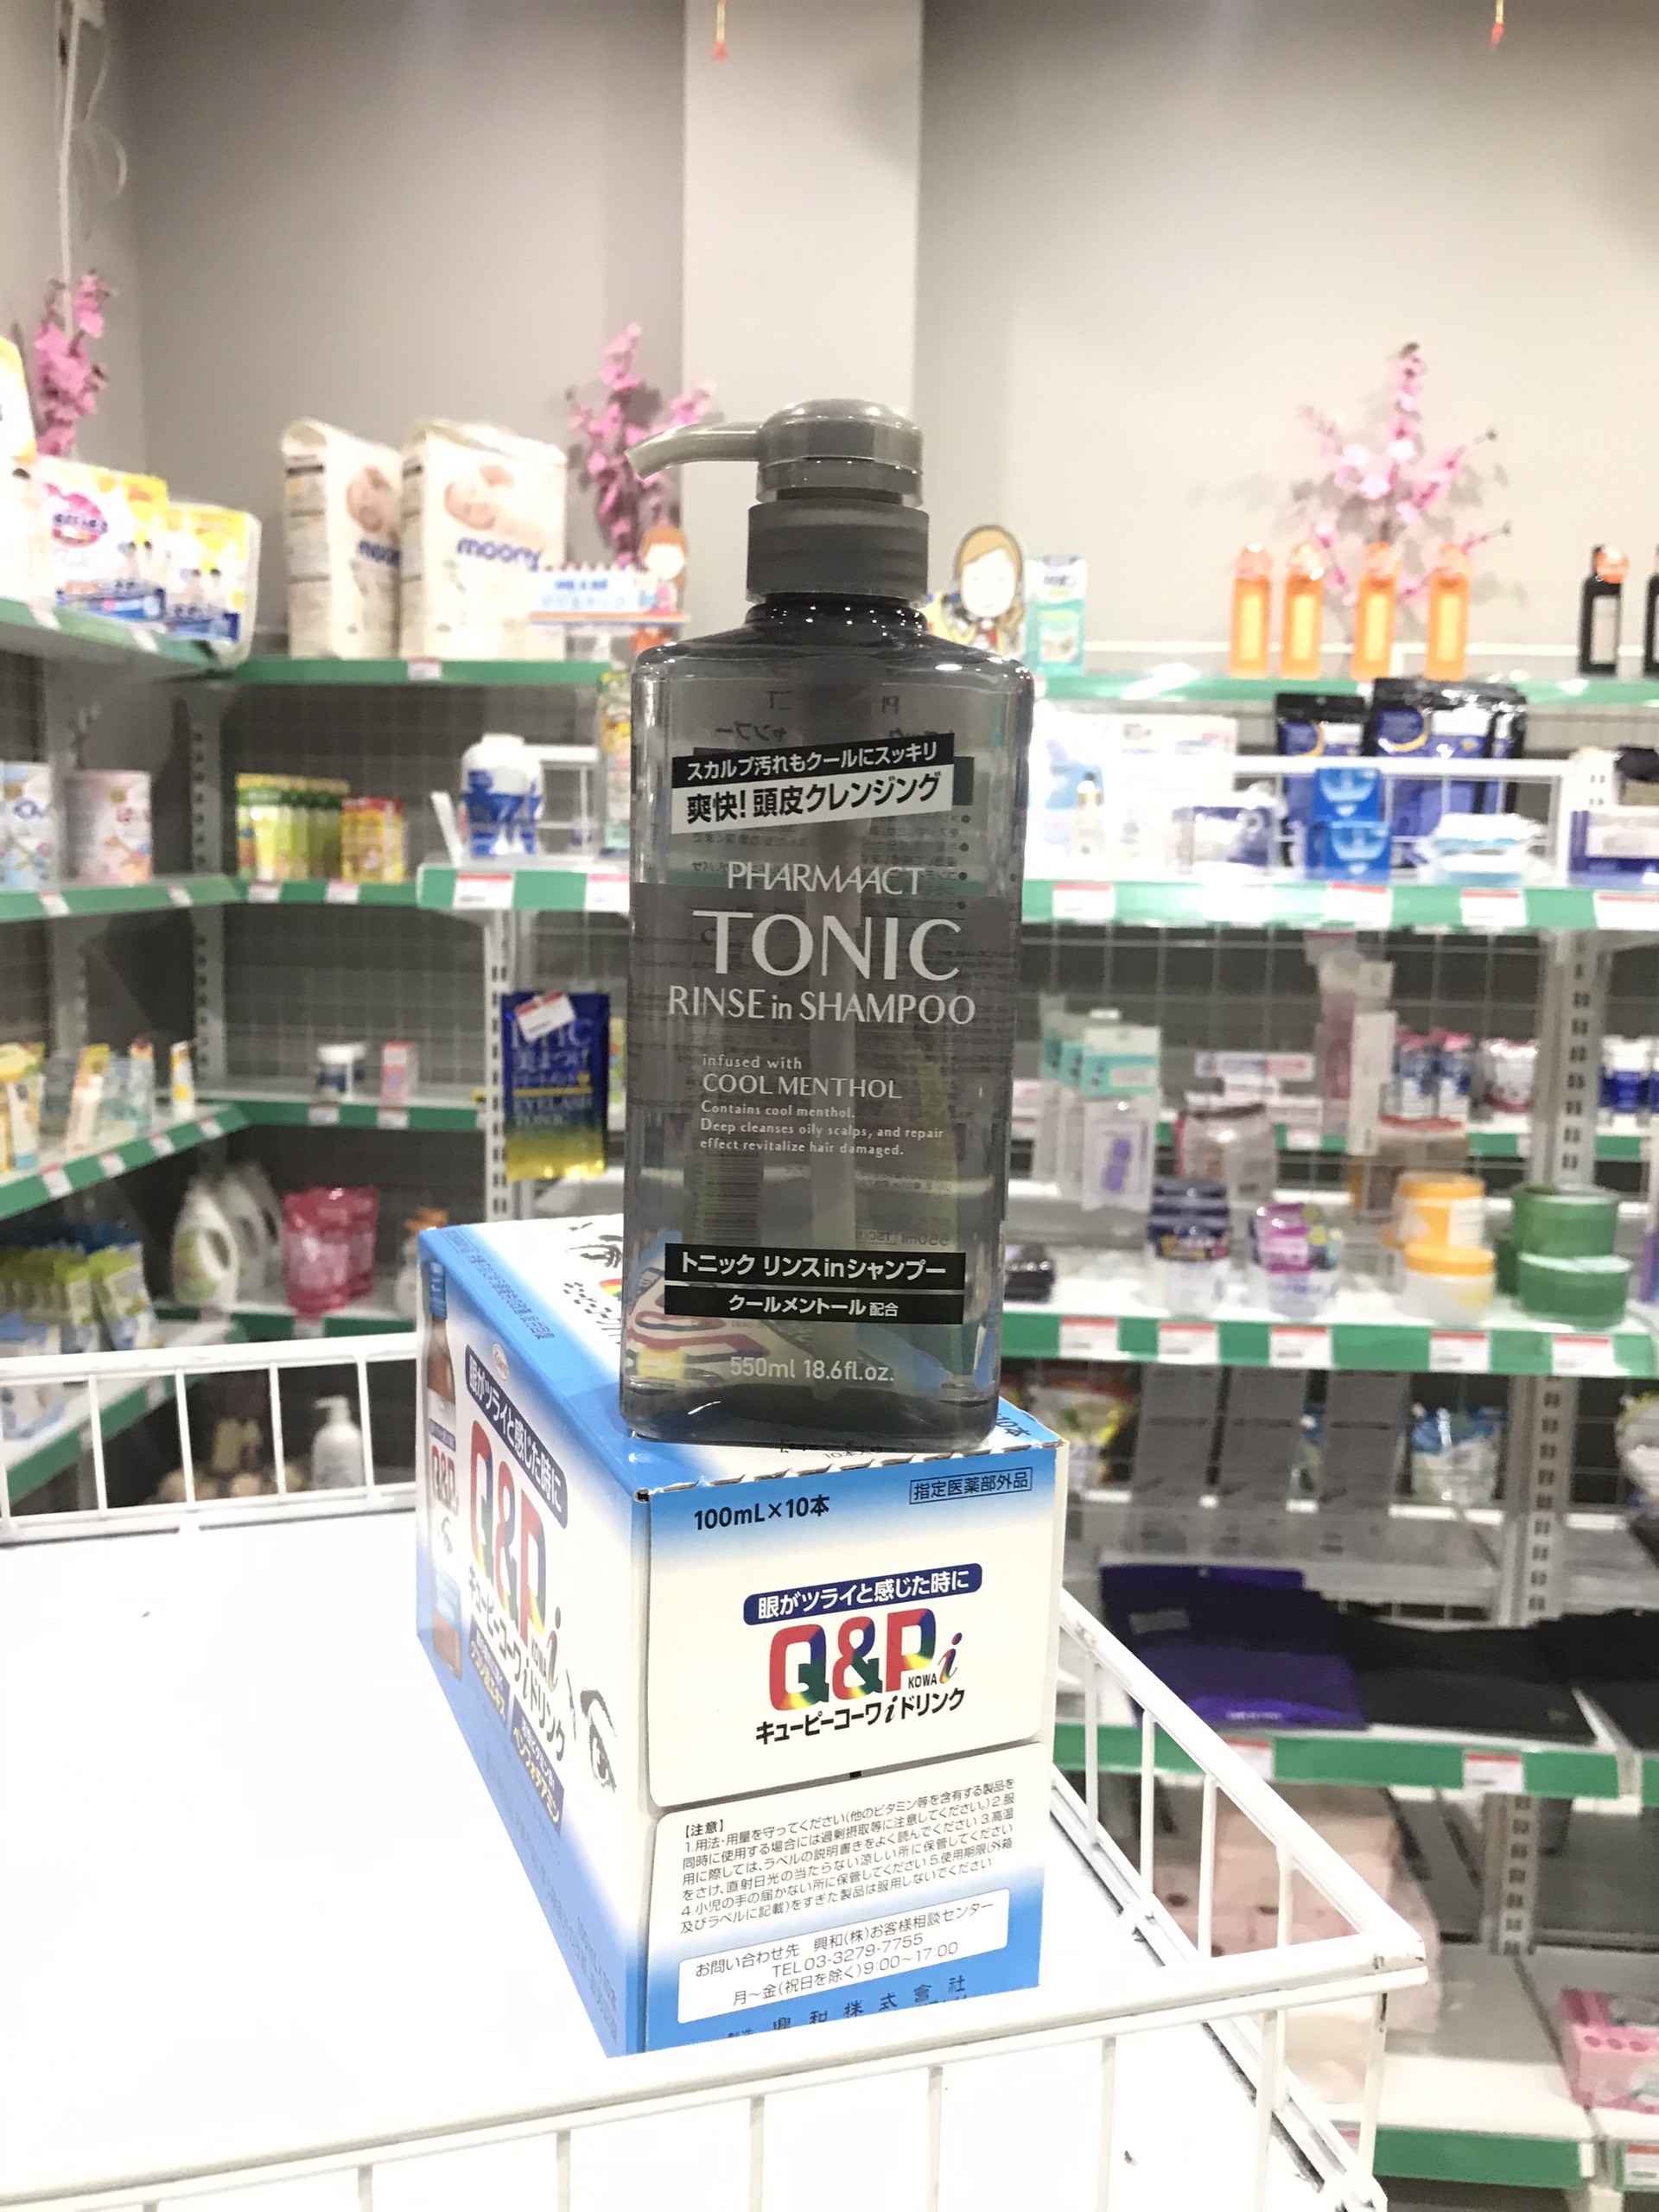 Dầu gội Pharmaact Tonic 550ml